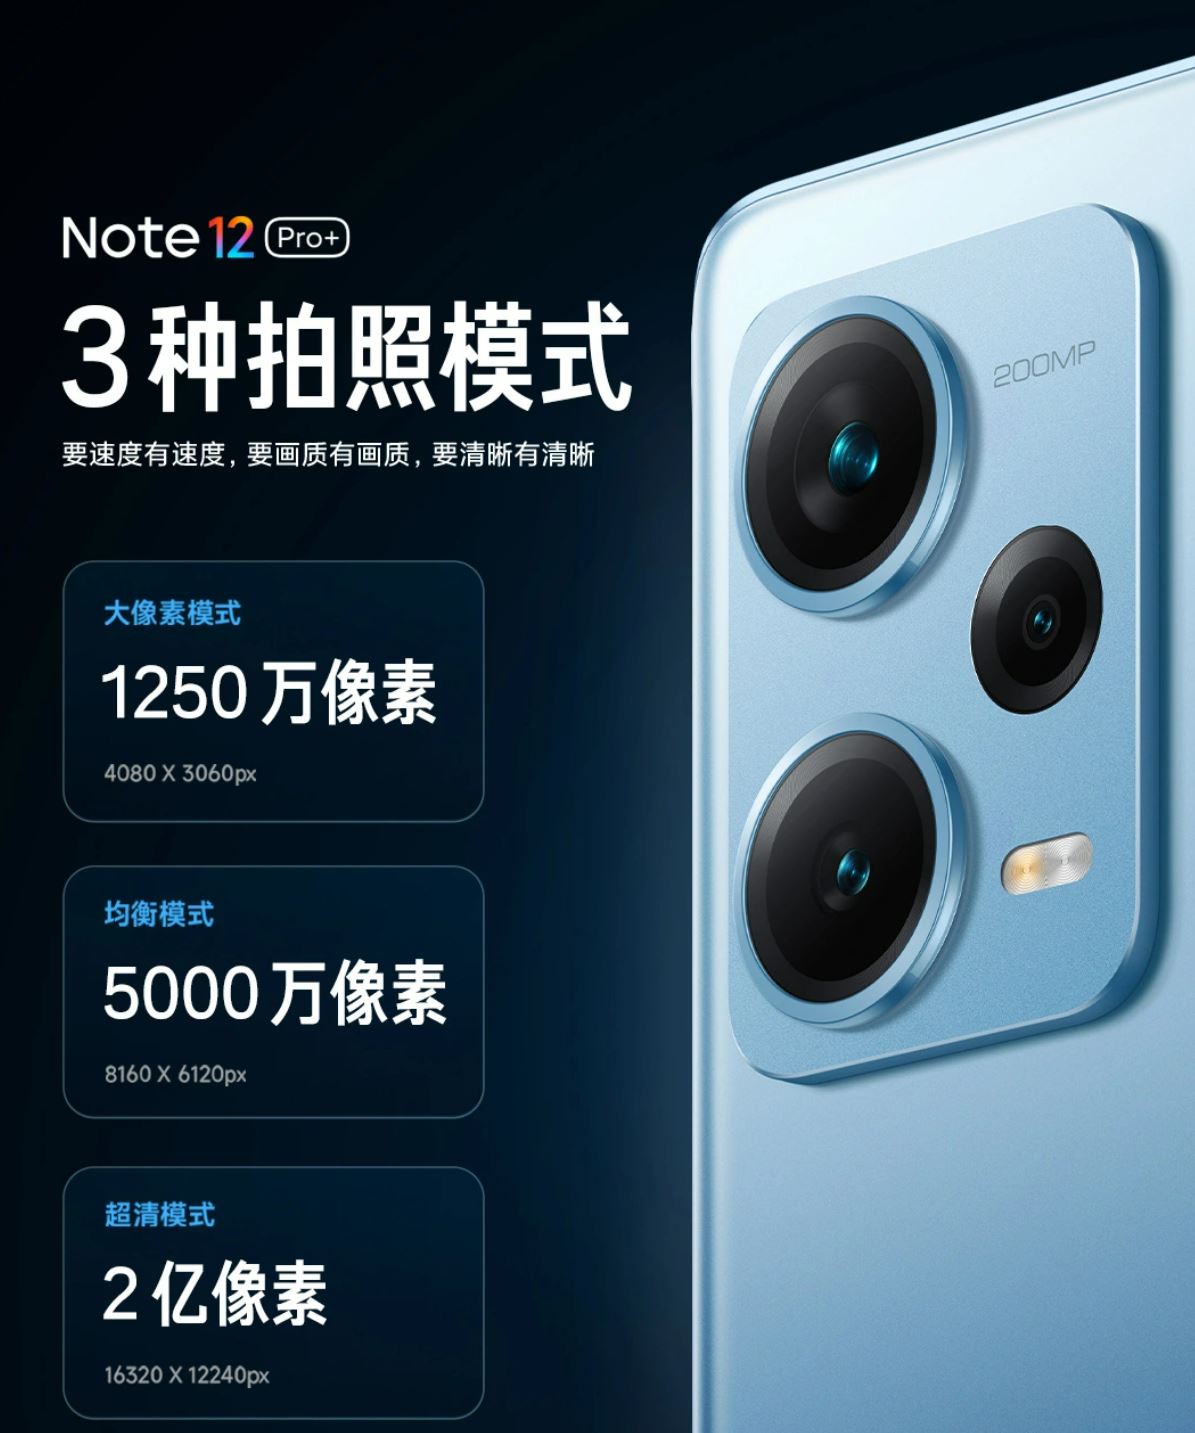 Redmi note 12 pro характеристики цена. Xiaomi Redmi Note 12. Xiaomi Note 12 Pro+. Камеры Redmi Note 12 Pro+ 5g. Смартфон Xiaomi Redmi Note 12 Pro+ 256.